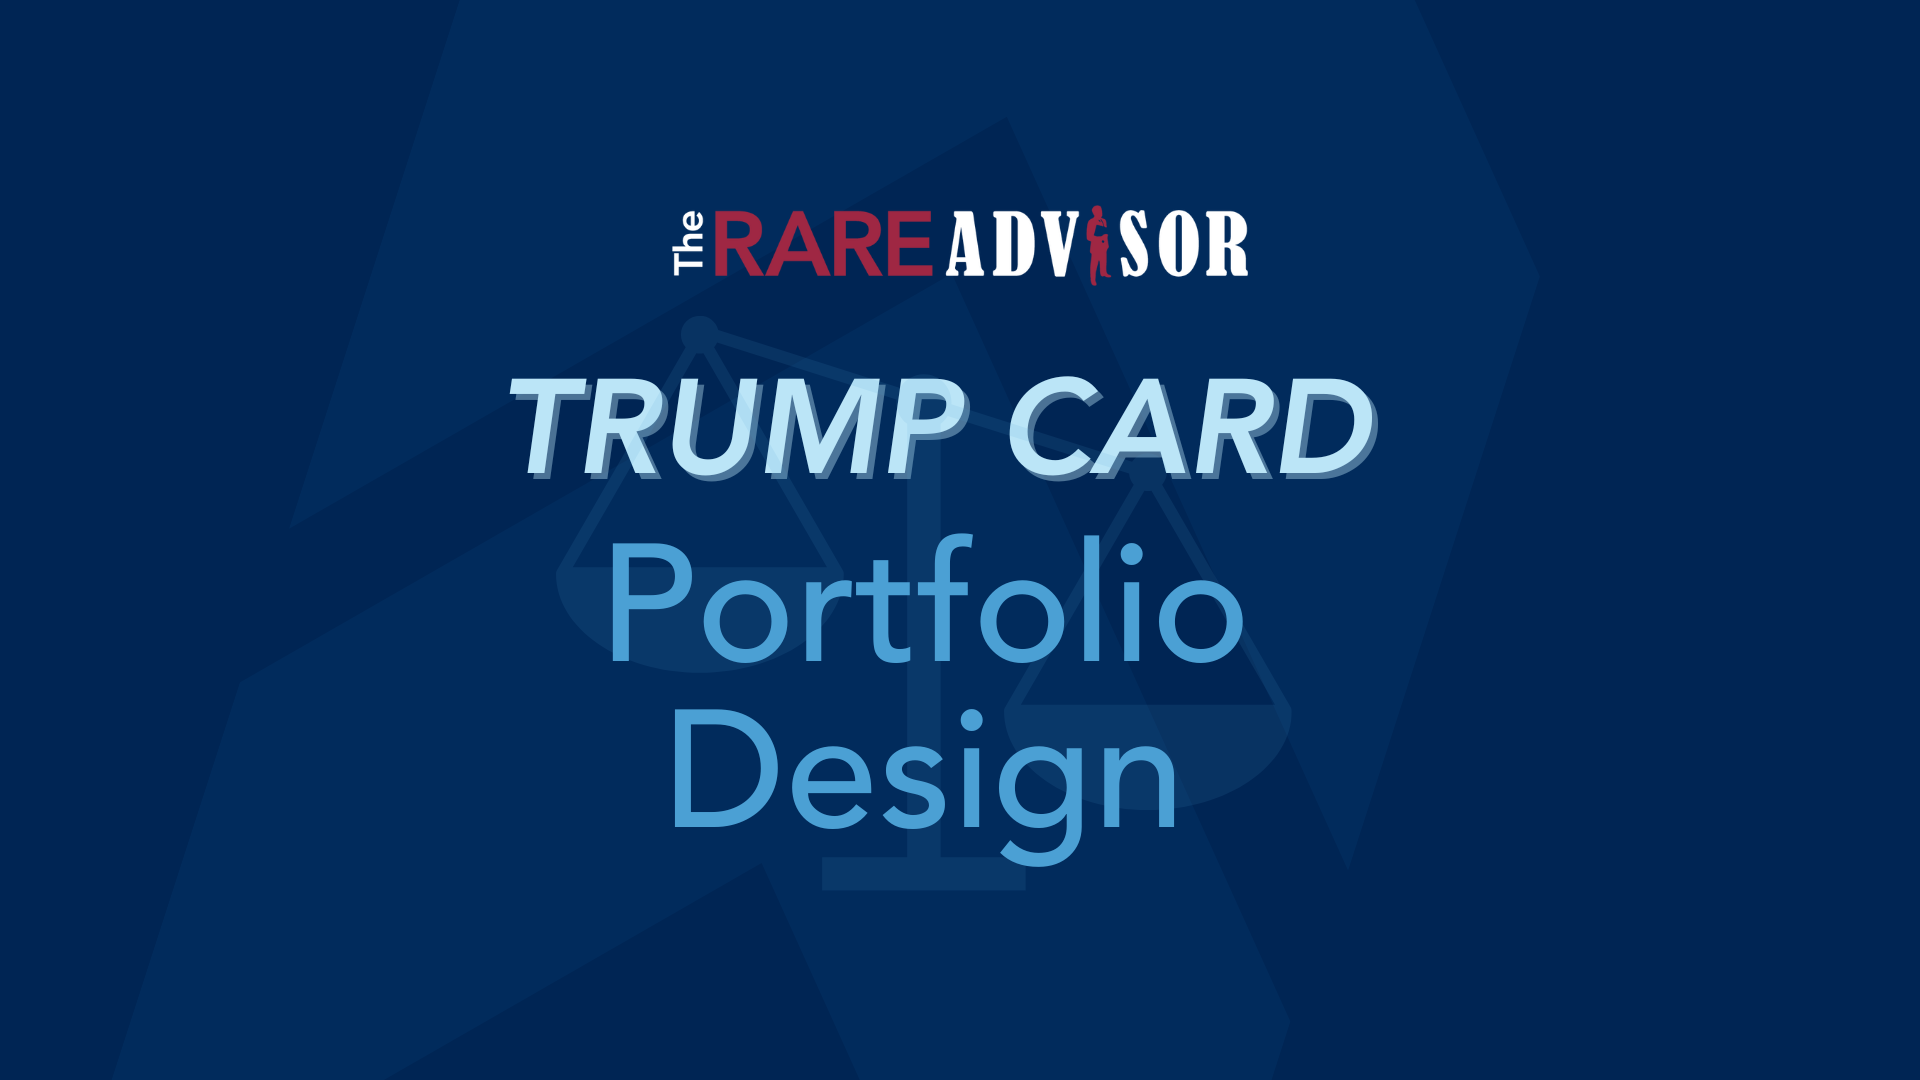 The RARE Advisor: Trump Card Portfolio Design